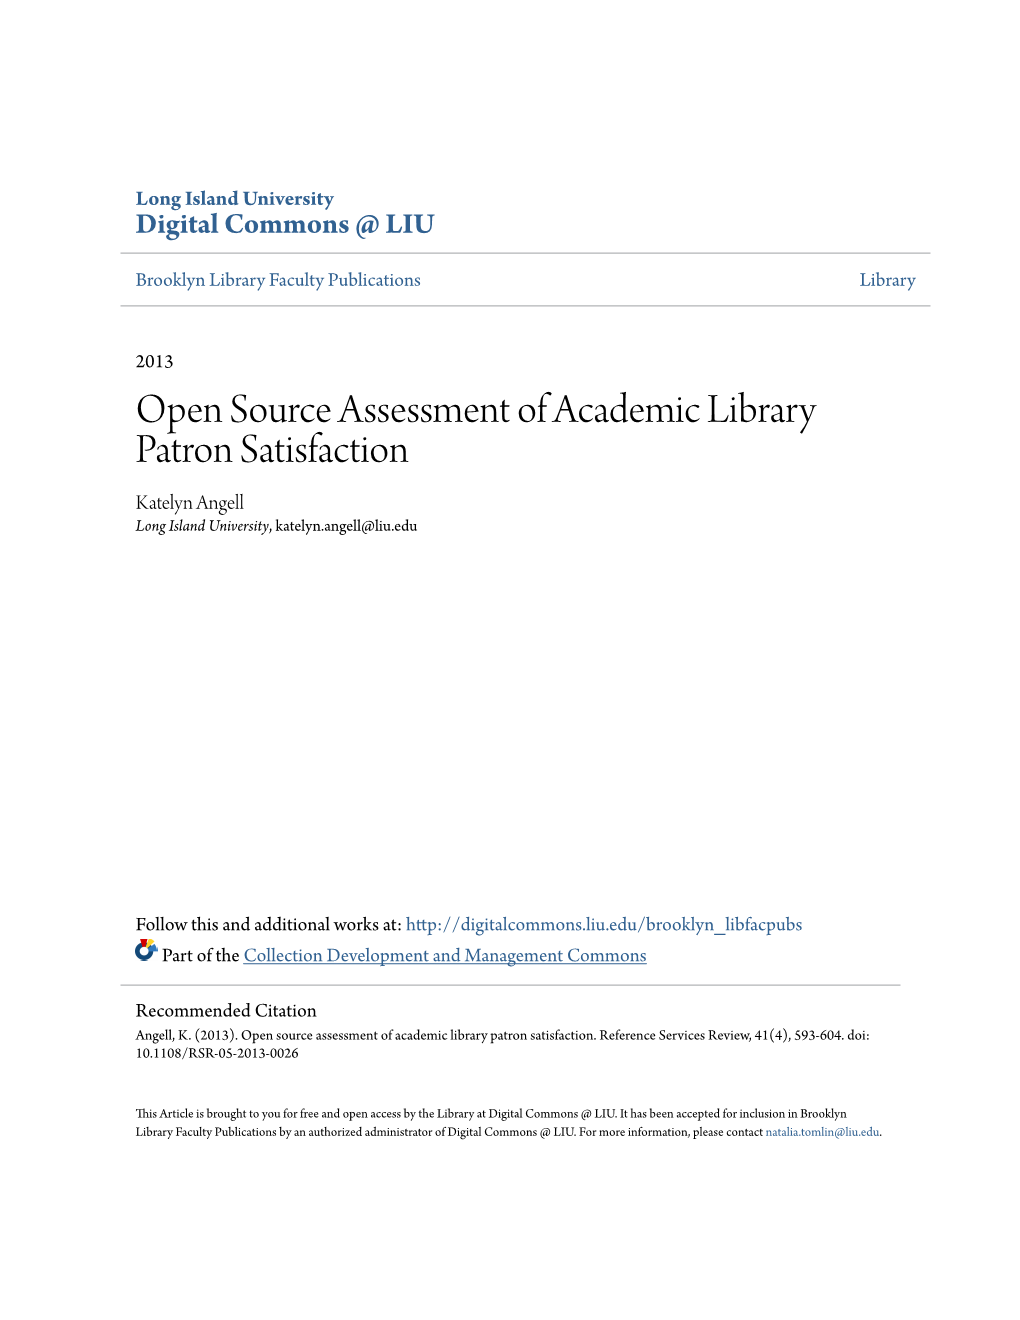 Open Source Assessment of Academic Library Patron Satisfaction Katelyn Angell Long Island University, Katelyn.Angell@Liu.Edu